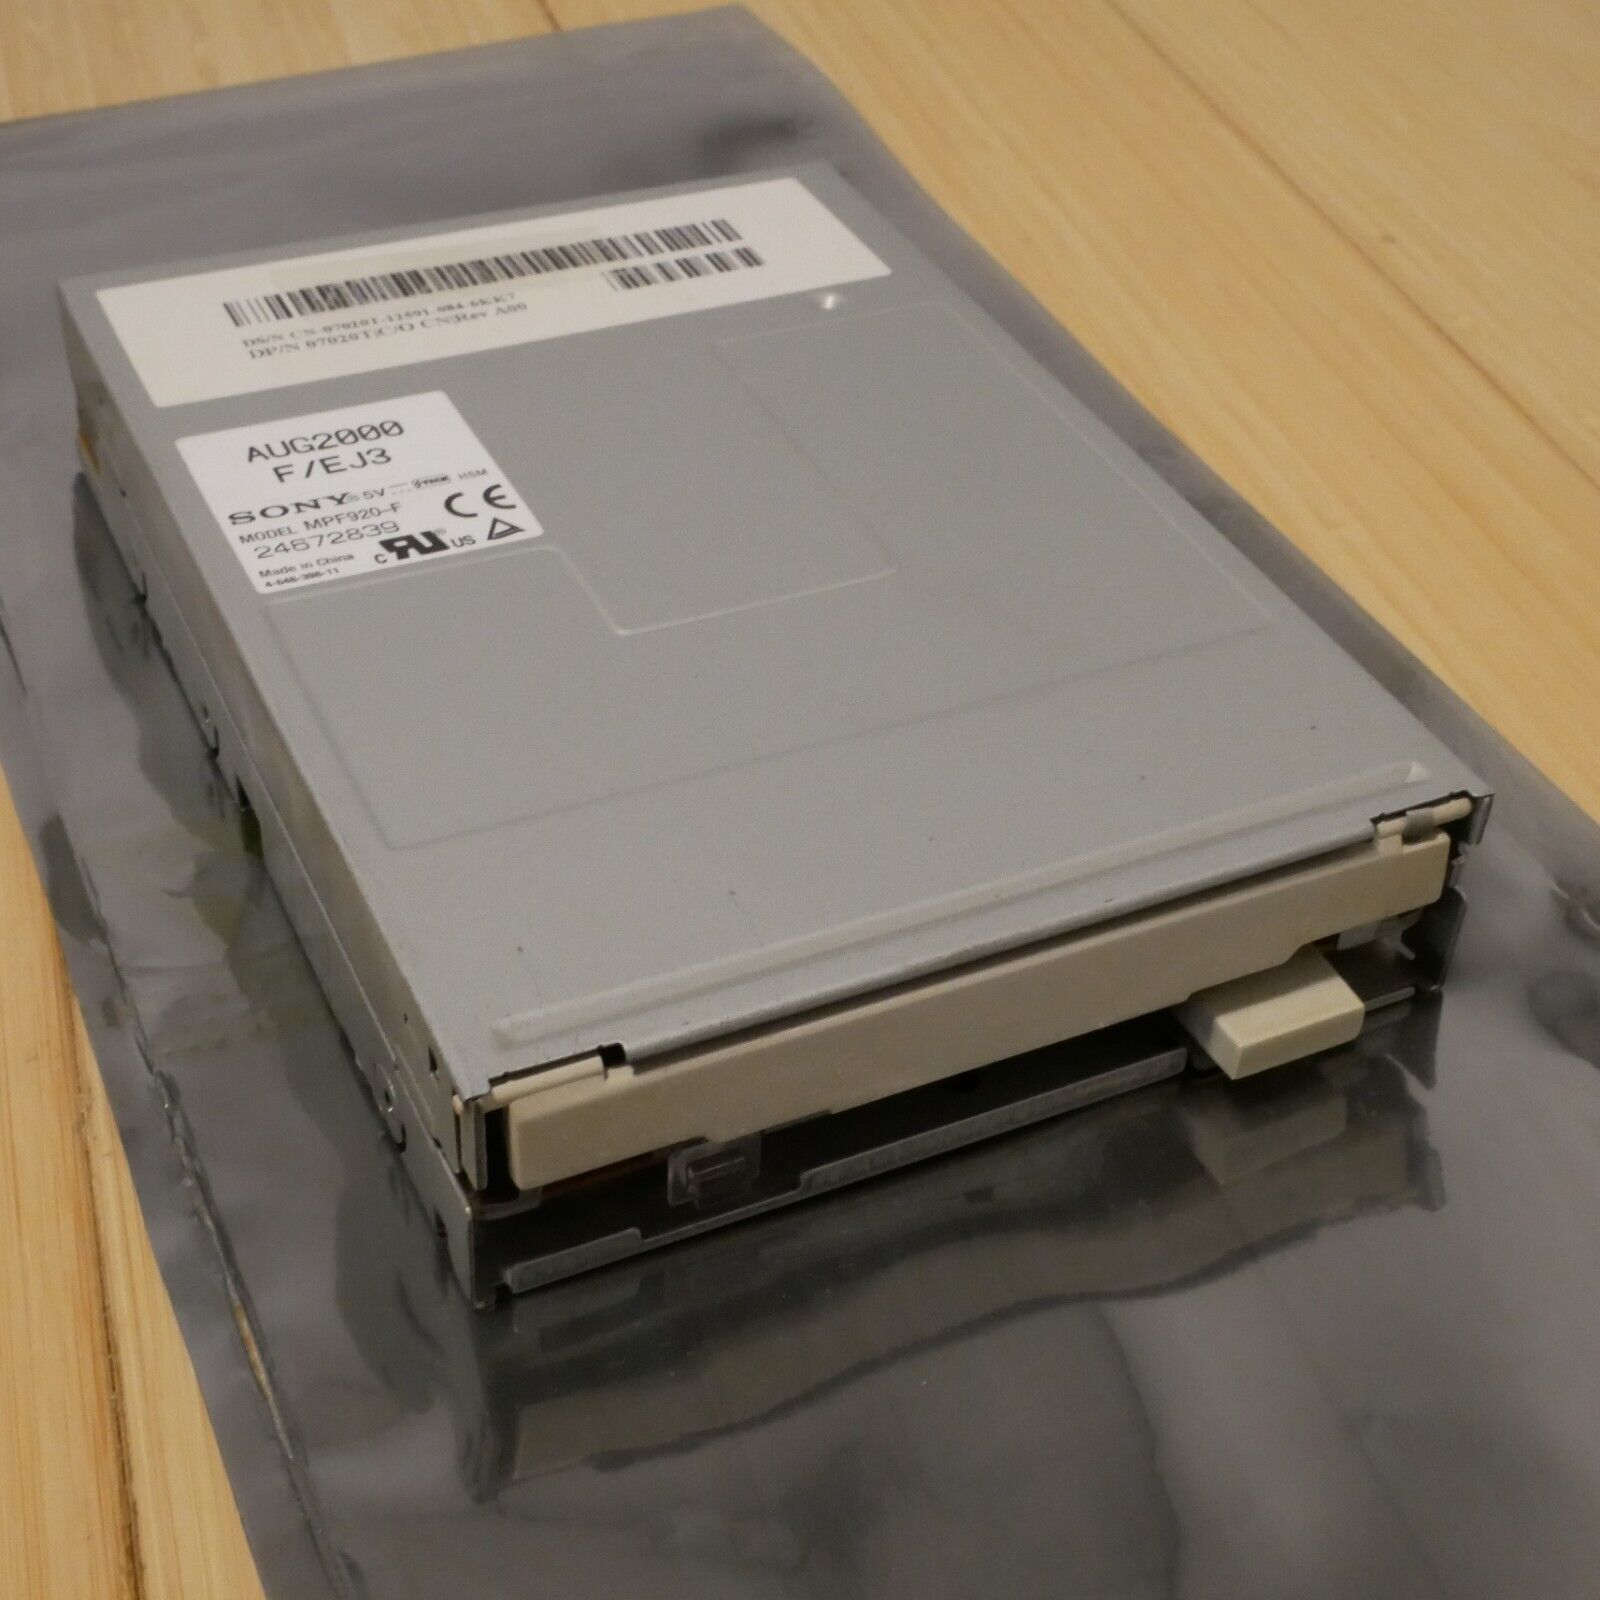 Sony MPF920-F Internal Desktop 3.5 inch Floppy Disk Drive 1.44MB - Tested 23 - $56.09